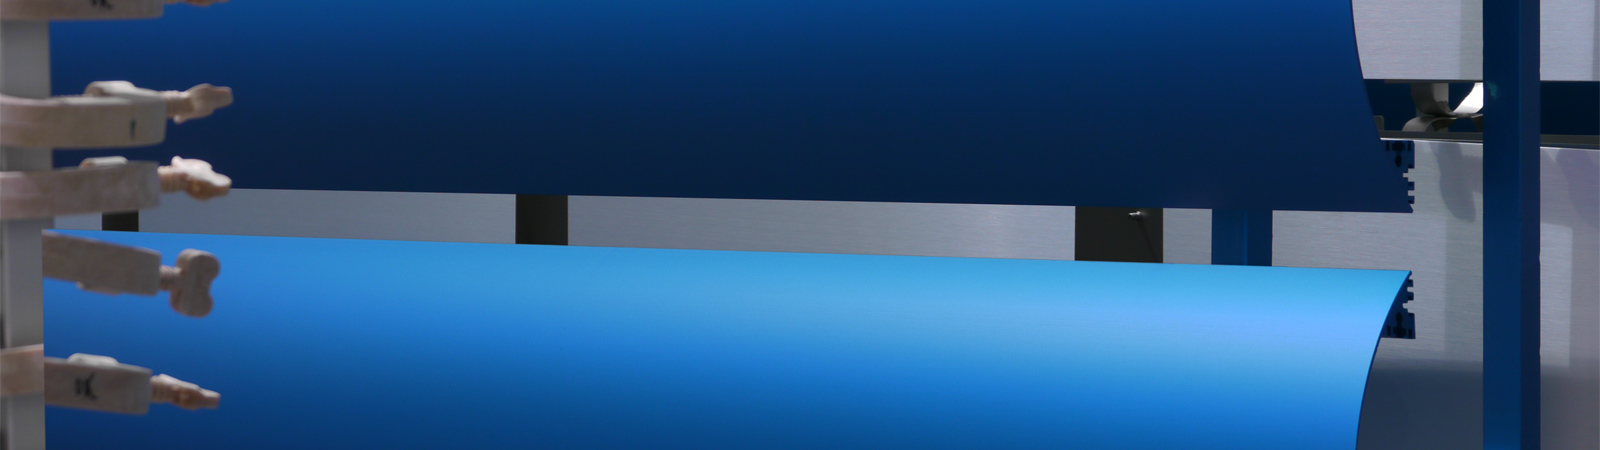 Anodised aluminium surface in Sandalor® blue